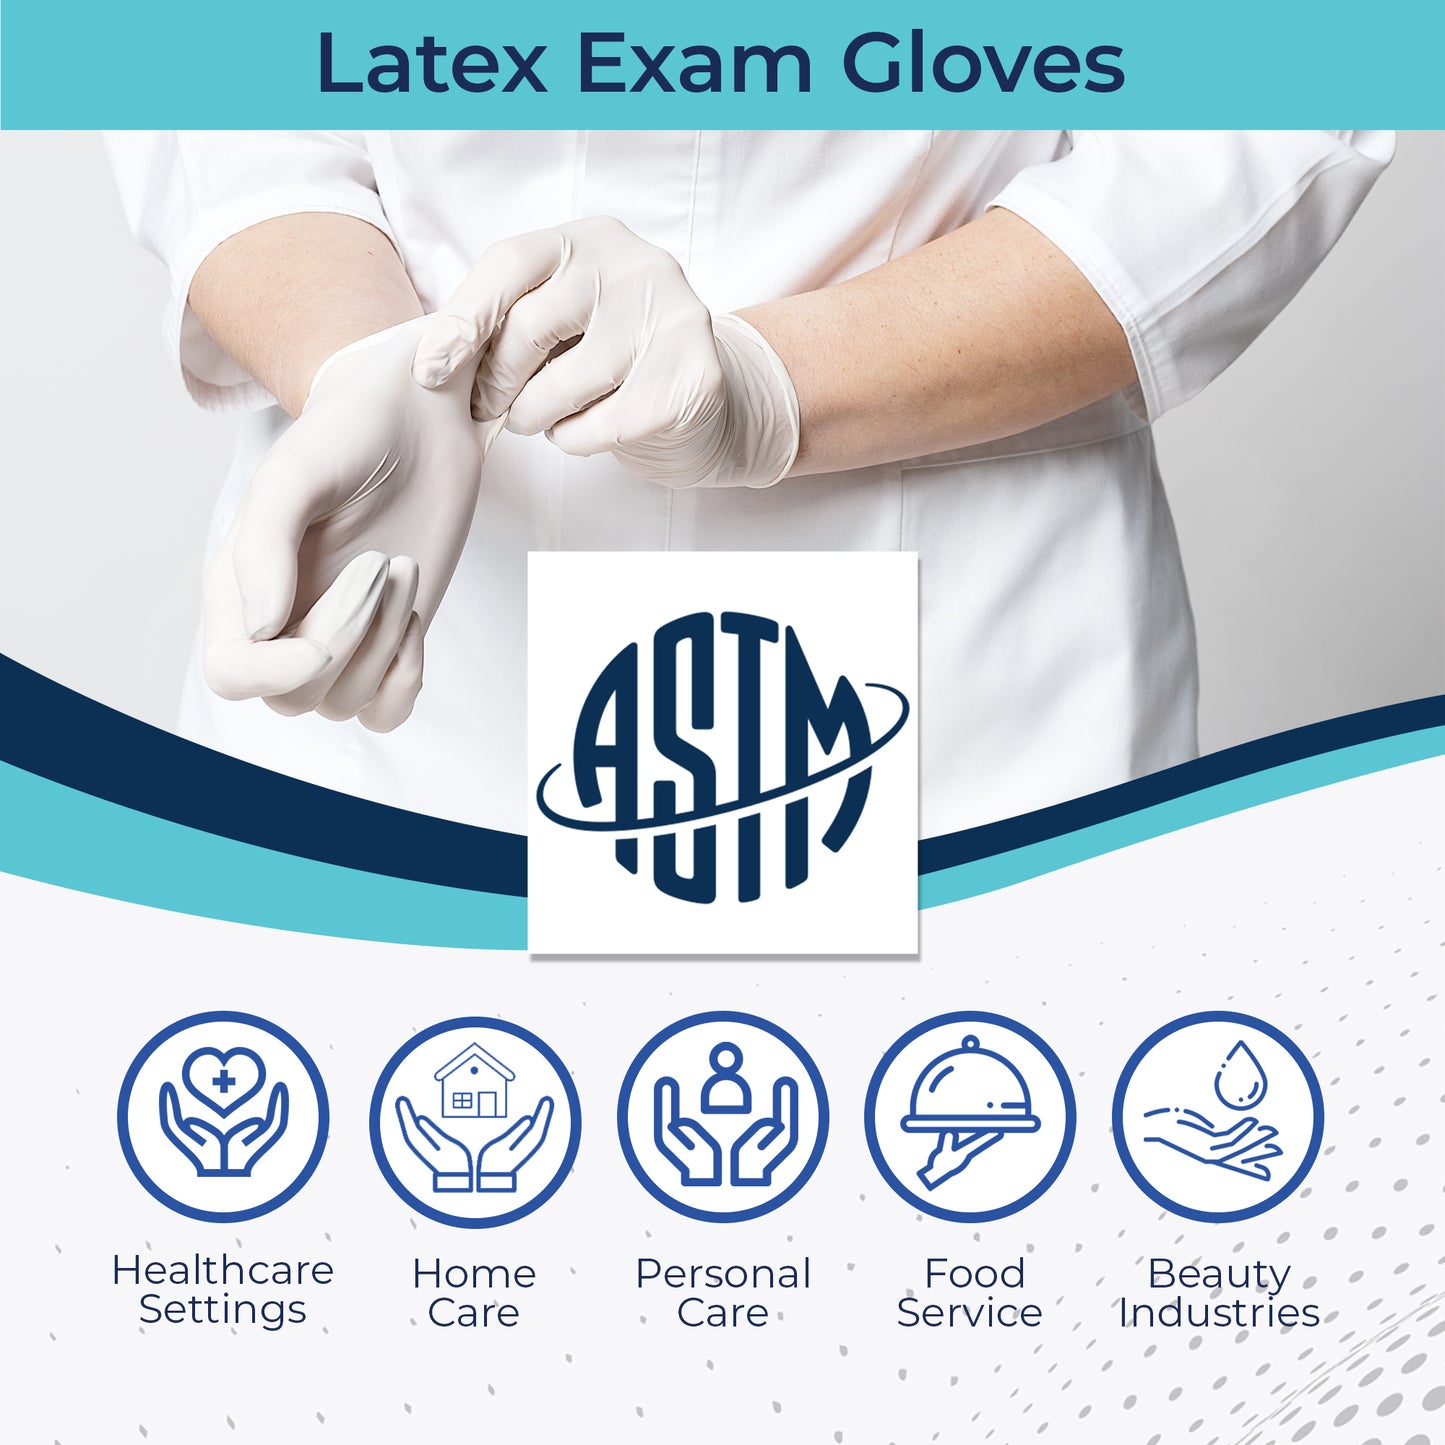 J-Care Latex Exam Gloves